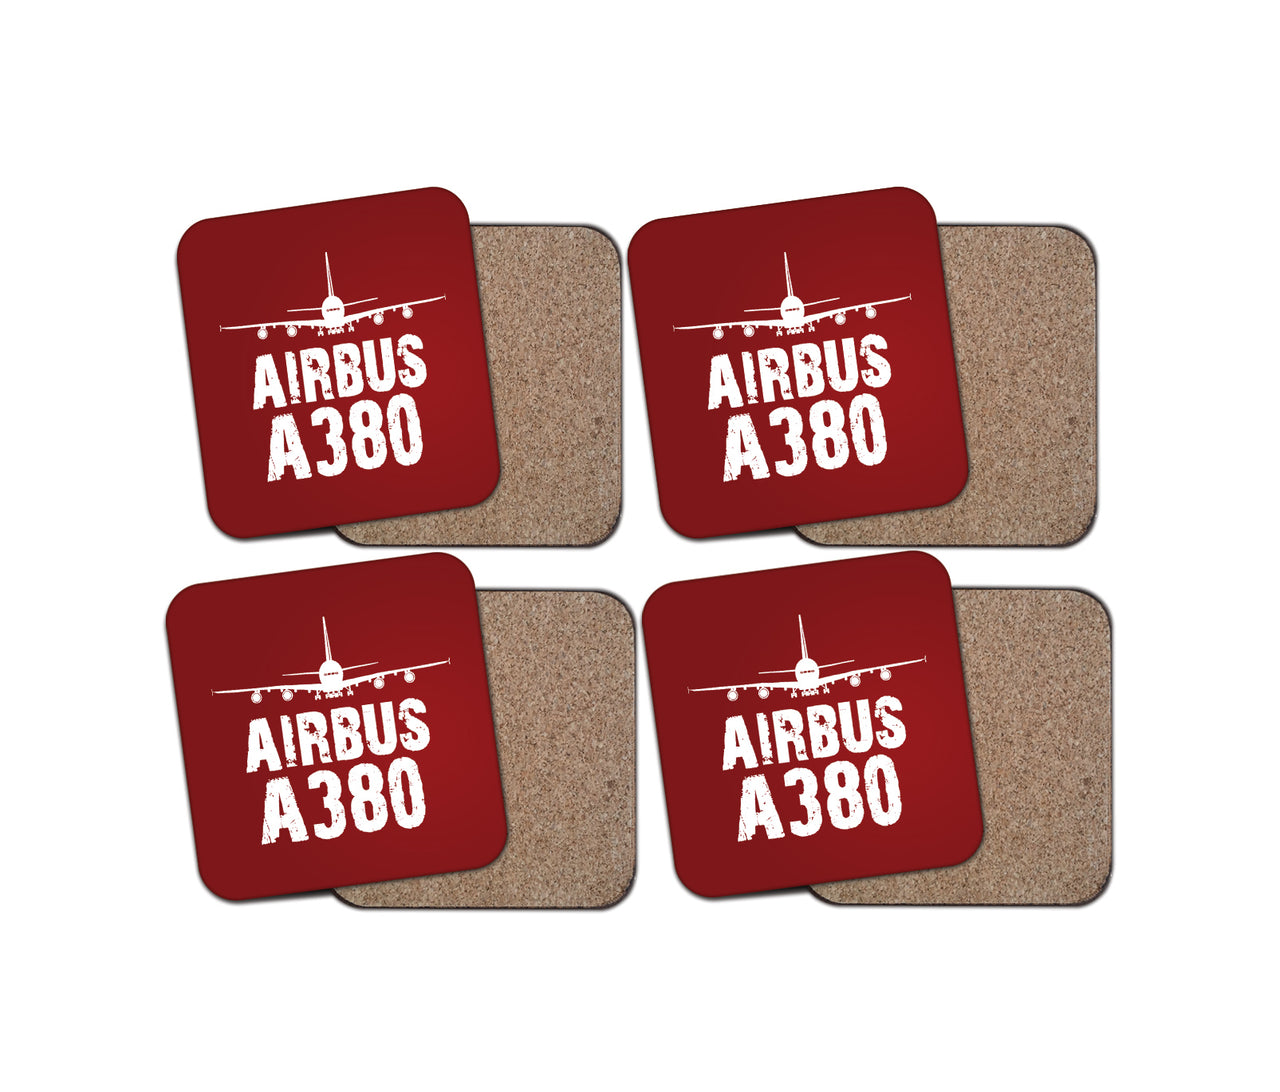 Airbus A380 & Plane Designed Coasters